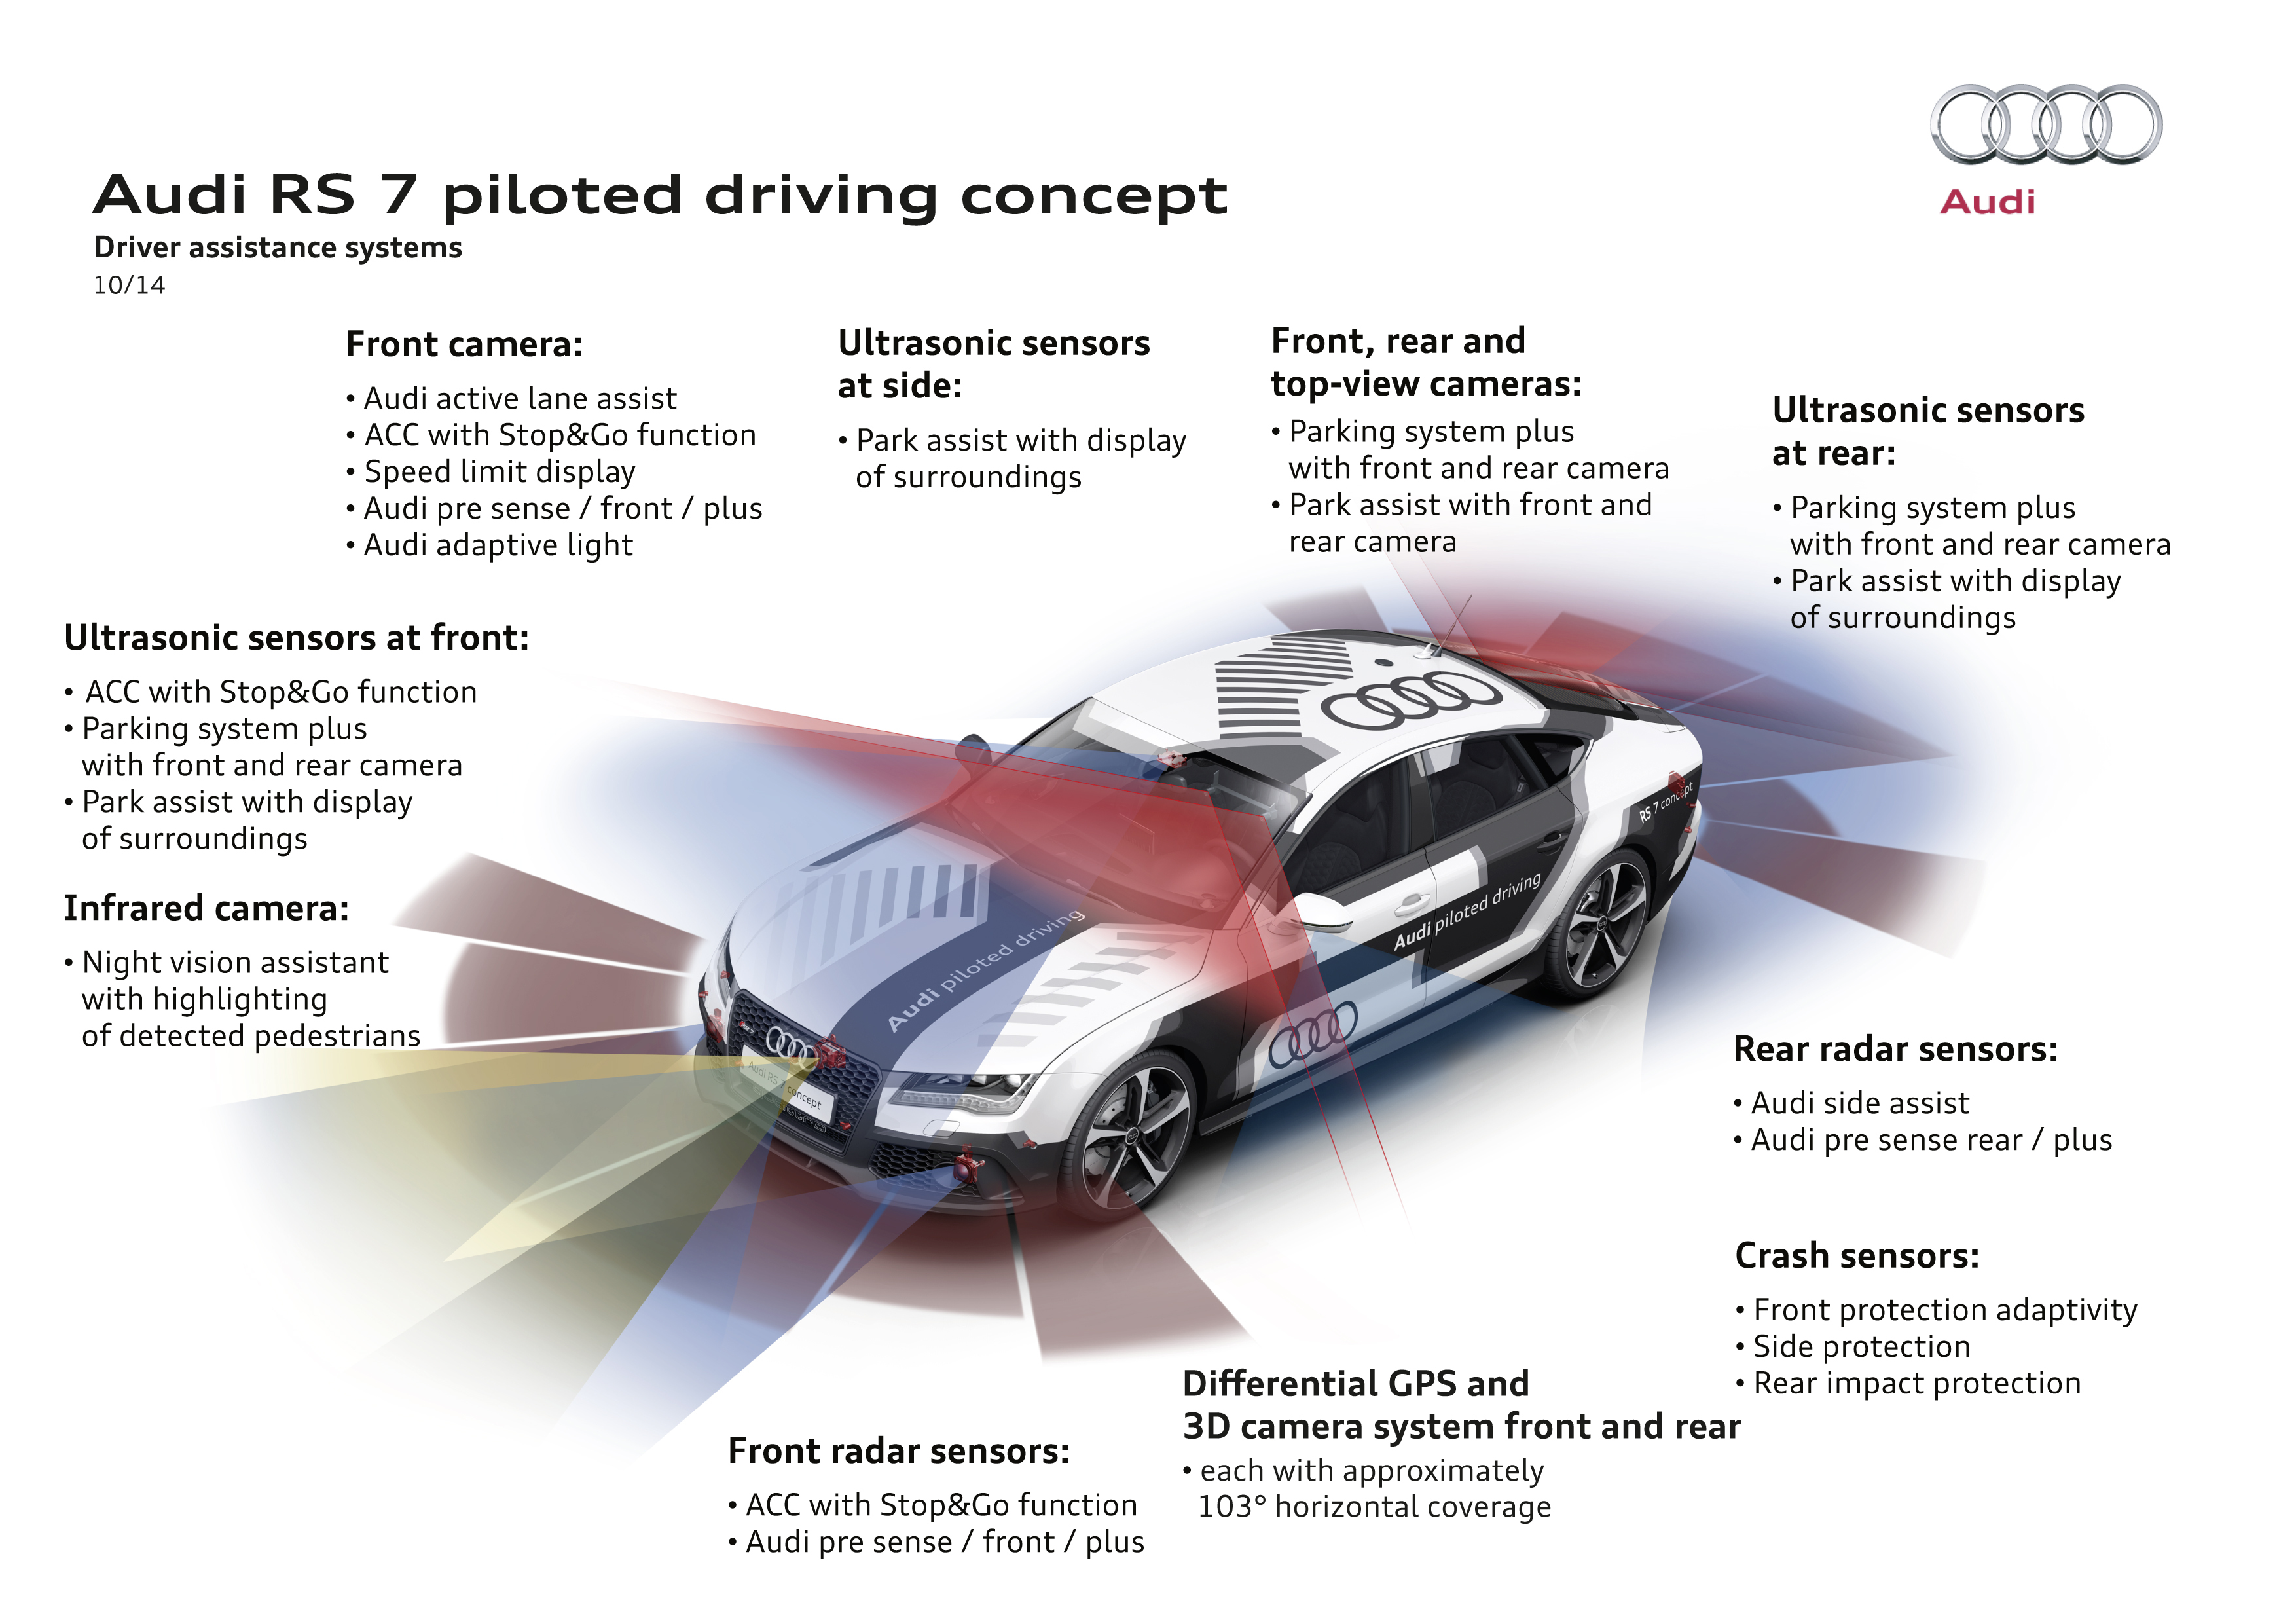 Self-driving Audi RS7